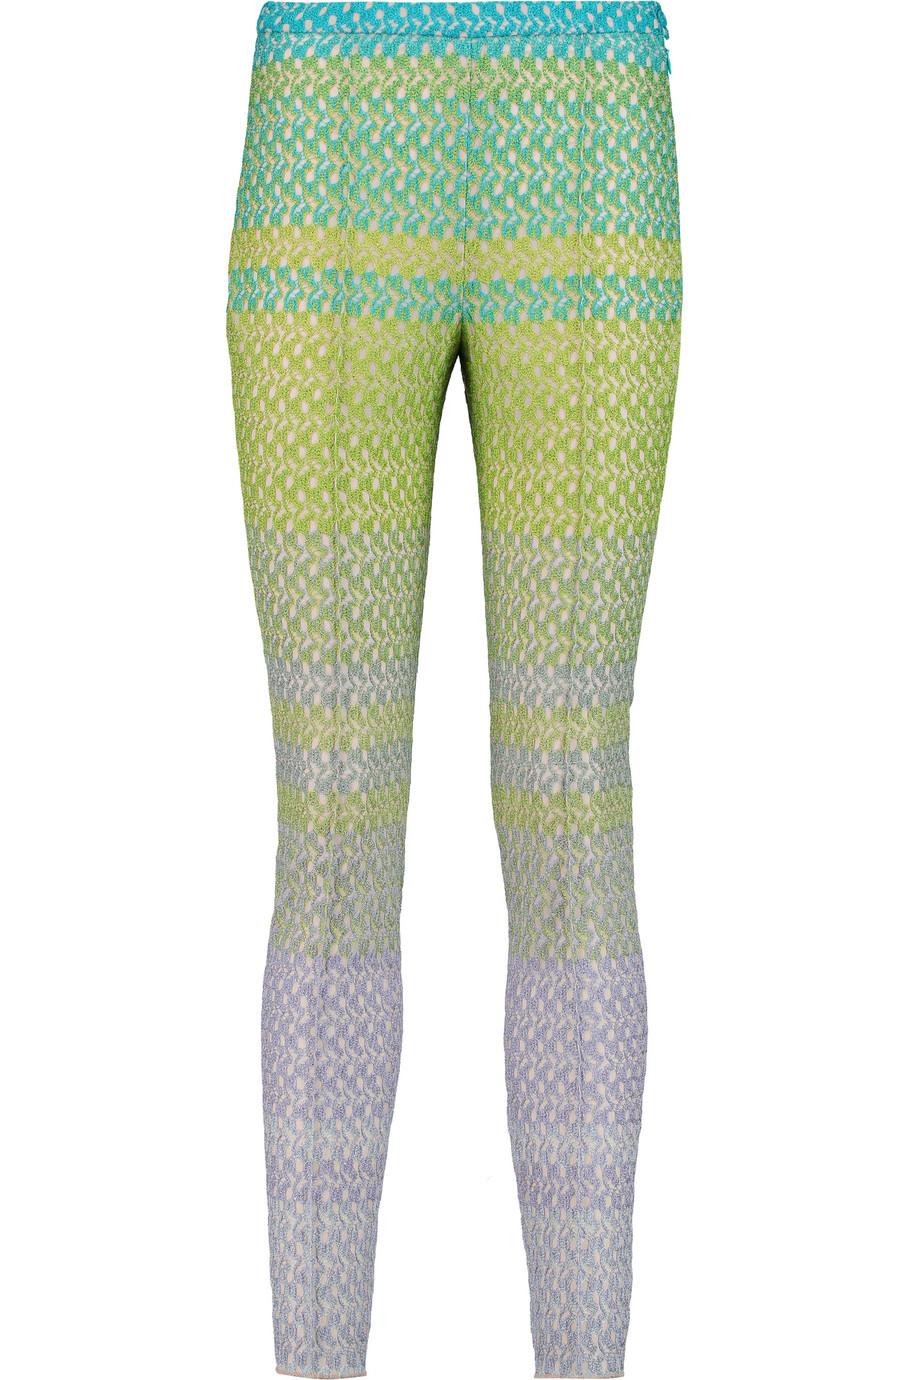 NEW Missoni Metallic Crochet Knit Pants Trousers 42 For Sale 1